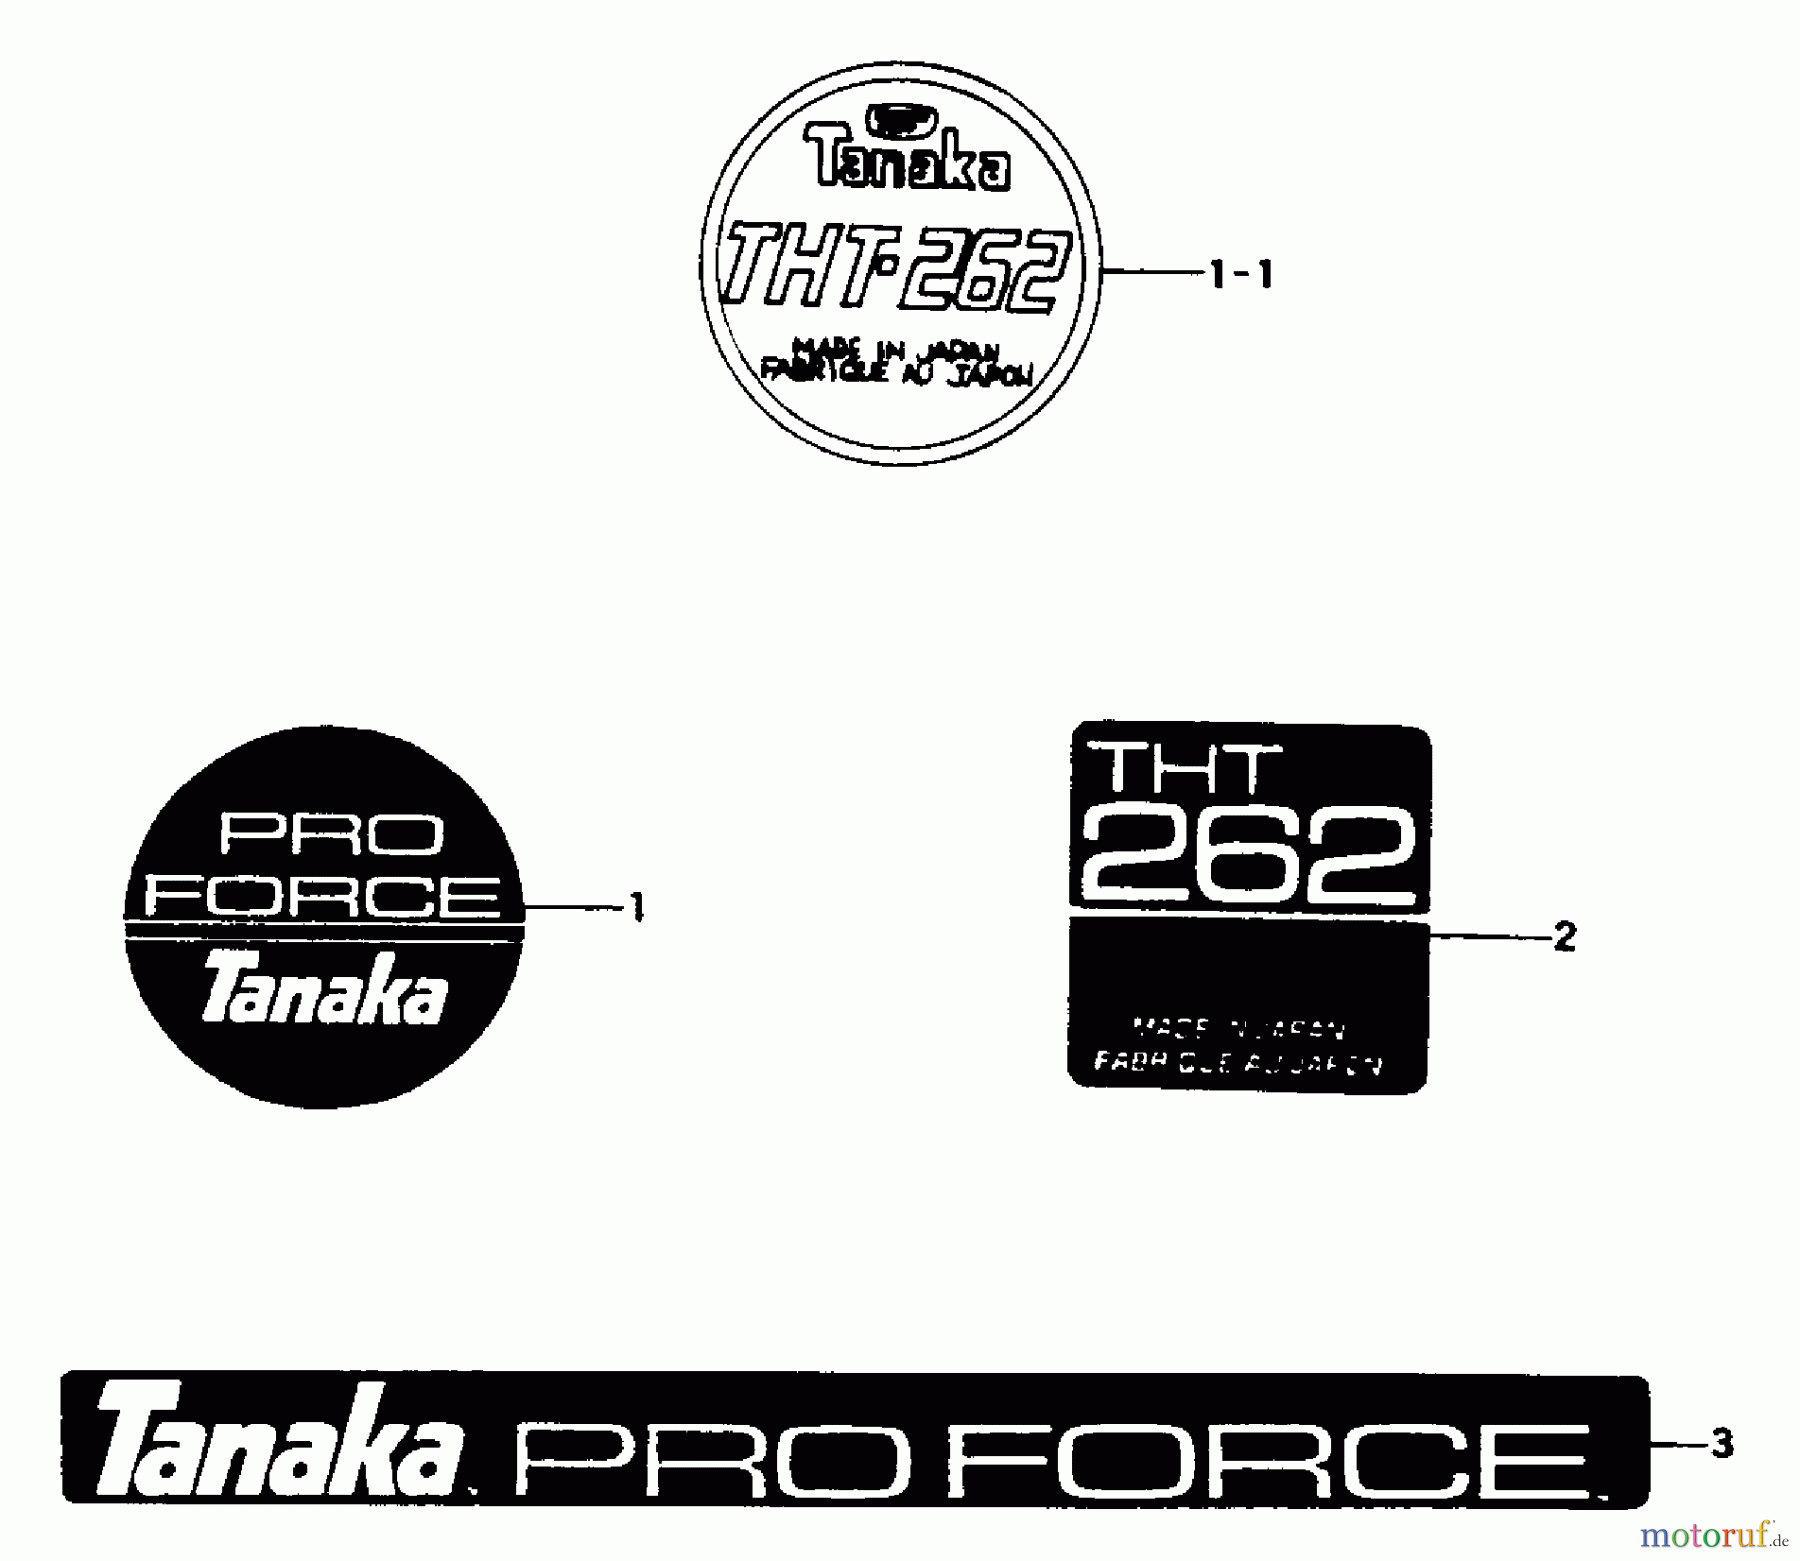  Tanaka Heckenscheeren THT-262 - Tanaka Hedge Trimmer Marks